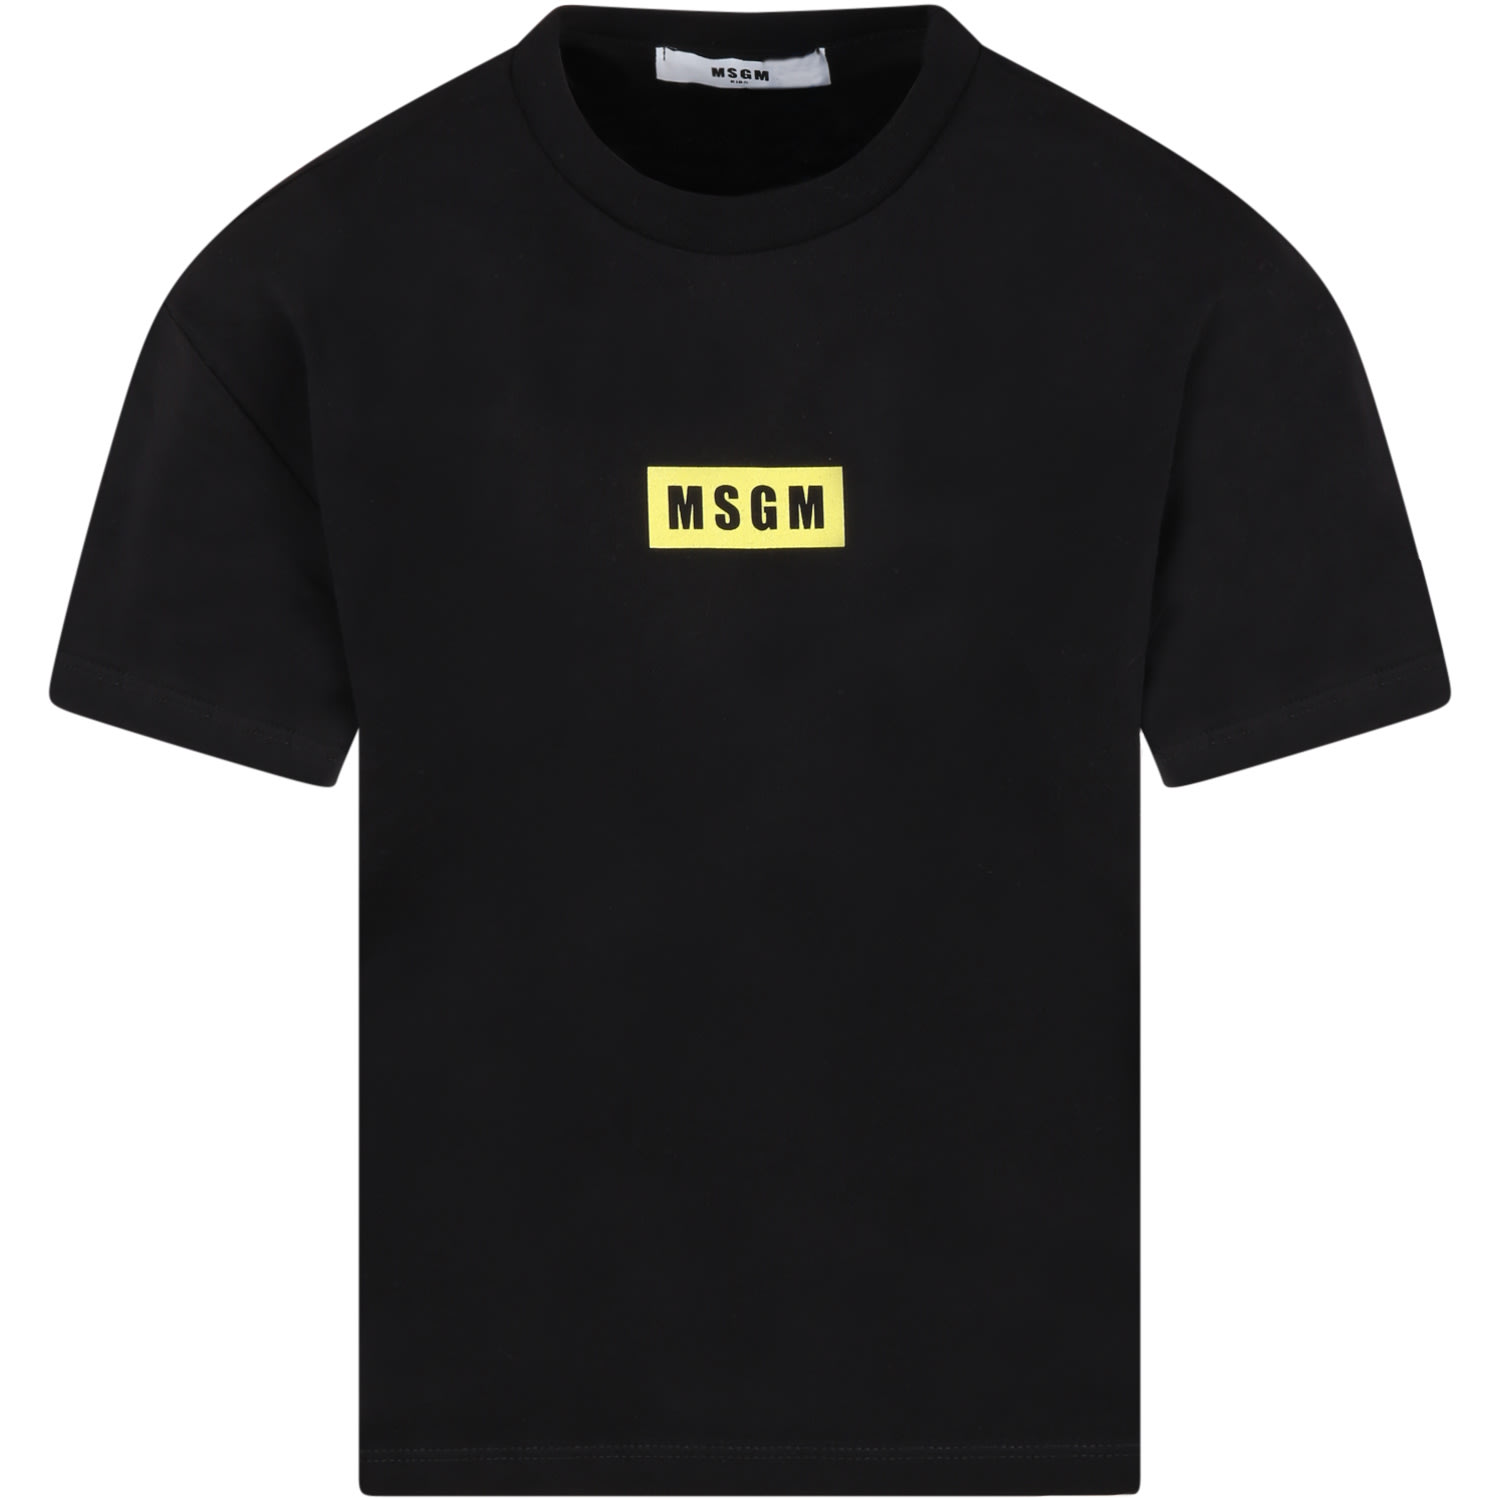 MSGM Black T-shirt For Boy With White Logo